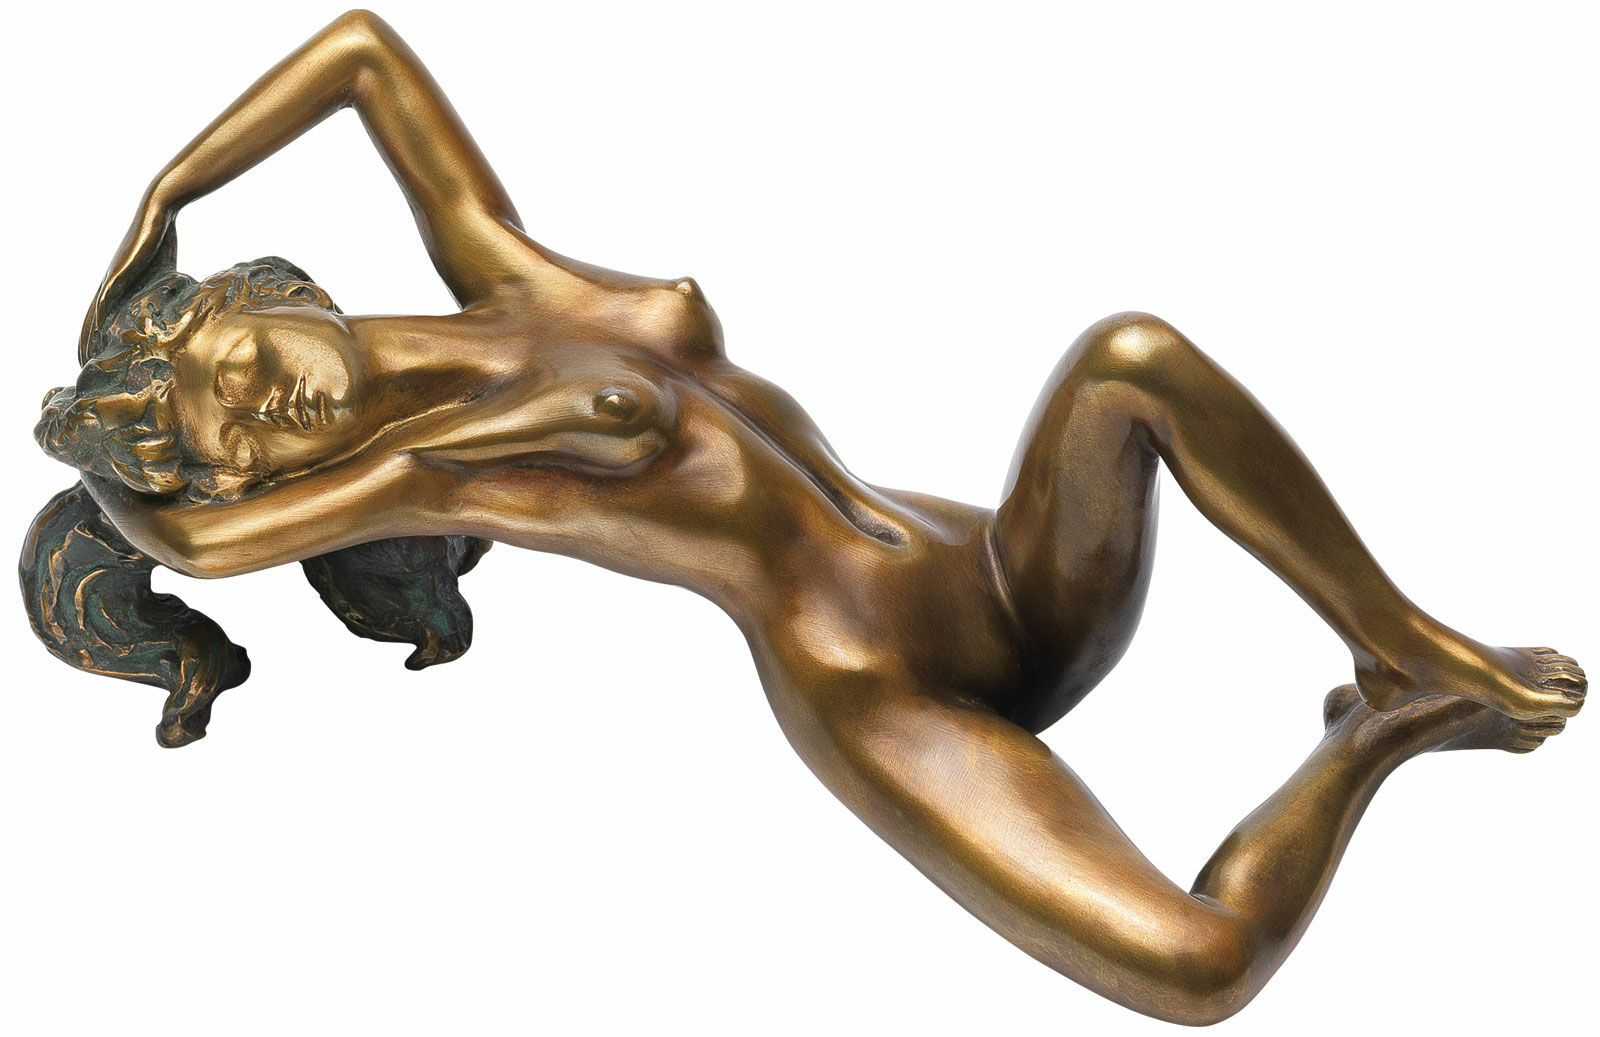 Sculpture "Carried by Dreamlike Happiness", bronze by Erwin A. Schinzel